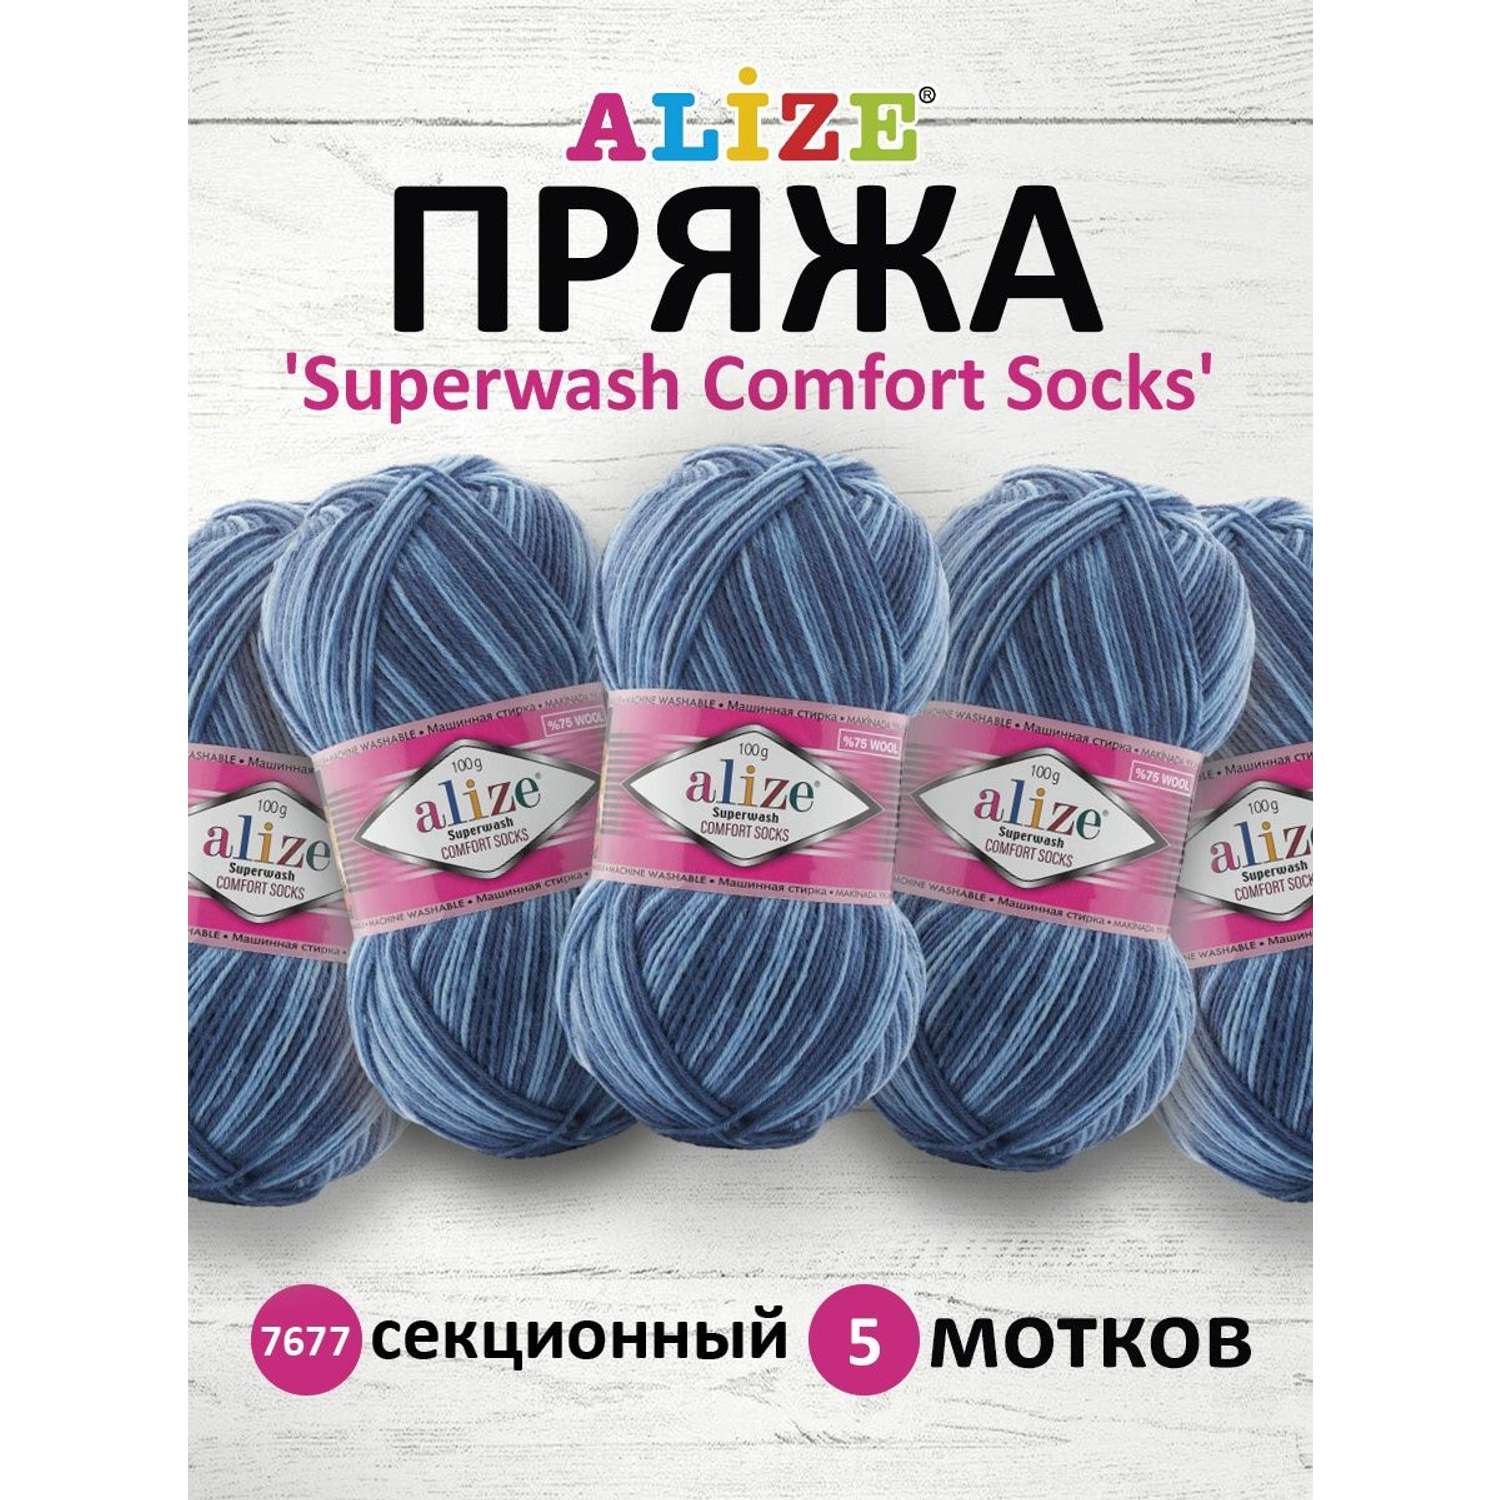 Пряжа Alize теплая для вязания носков чулок Superwash Comfort Socks 100 гр 420 м 5 мотков 7677 - фото 1